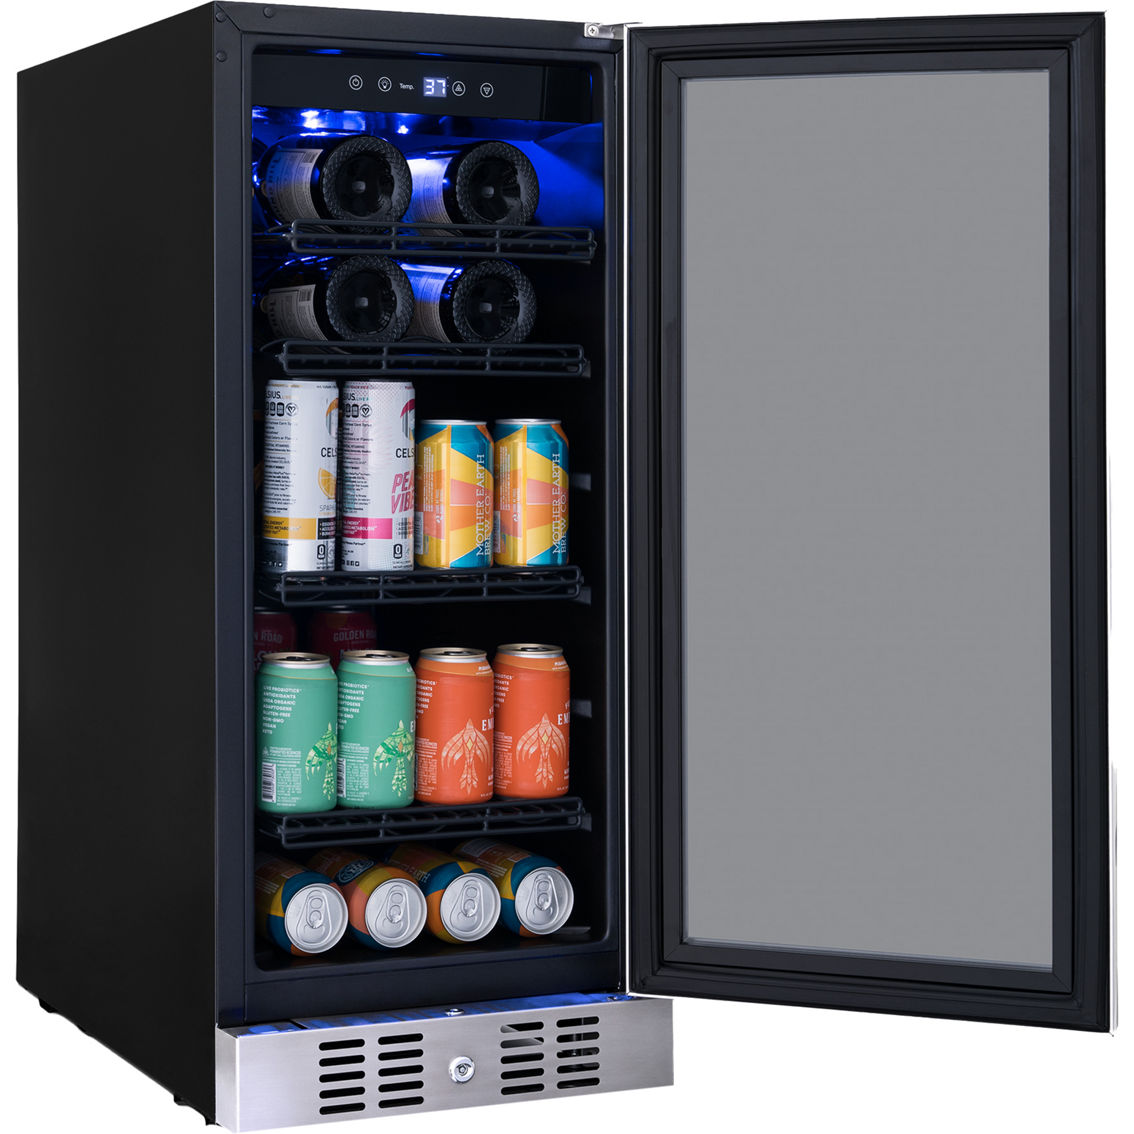 Newair 15 in. FlipShelf Wine and Beverage Refrigerator - Image 4 of 10